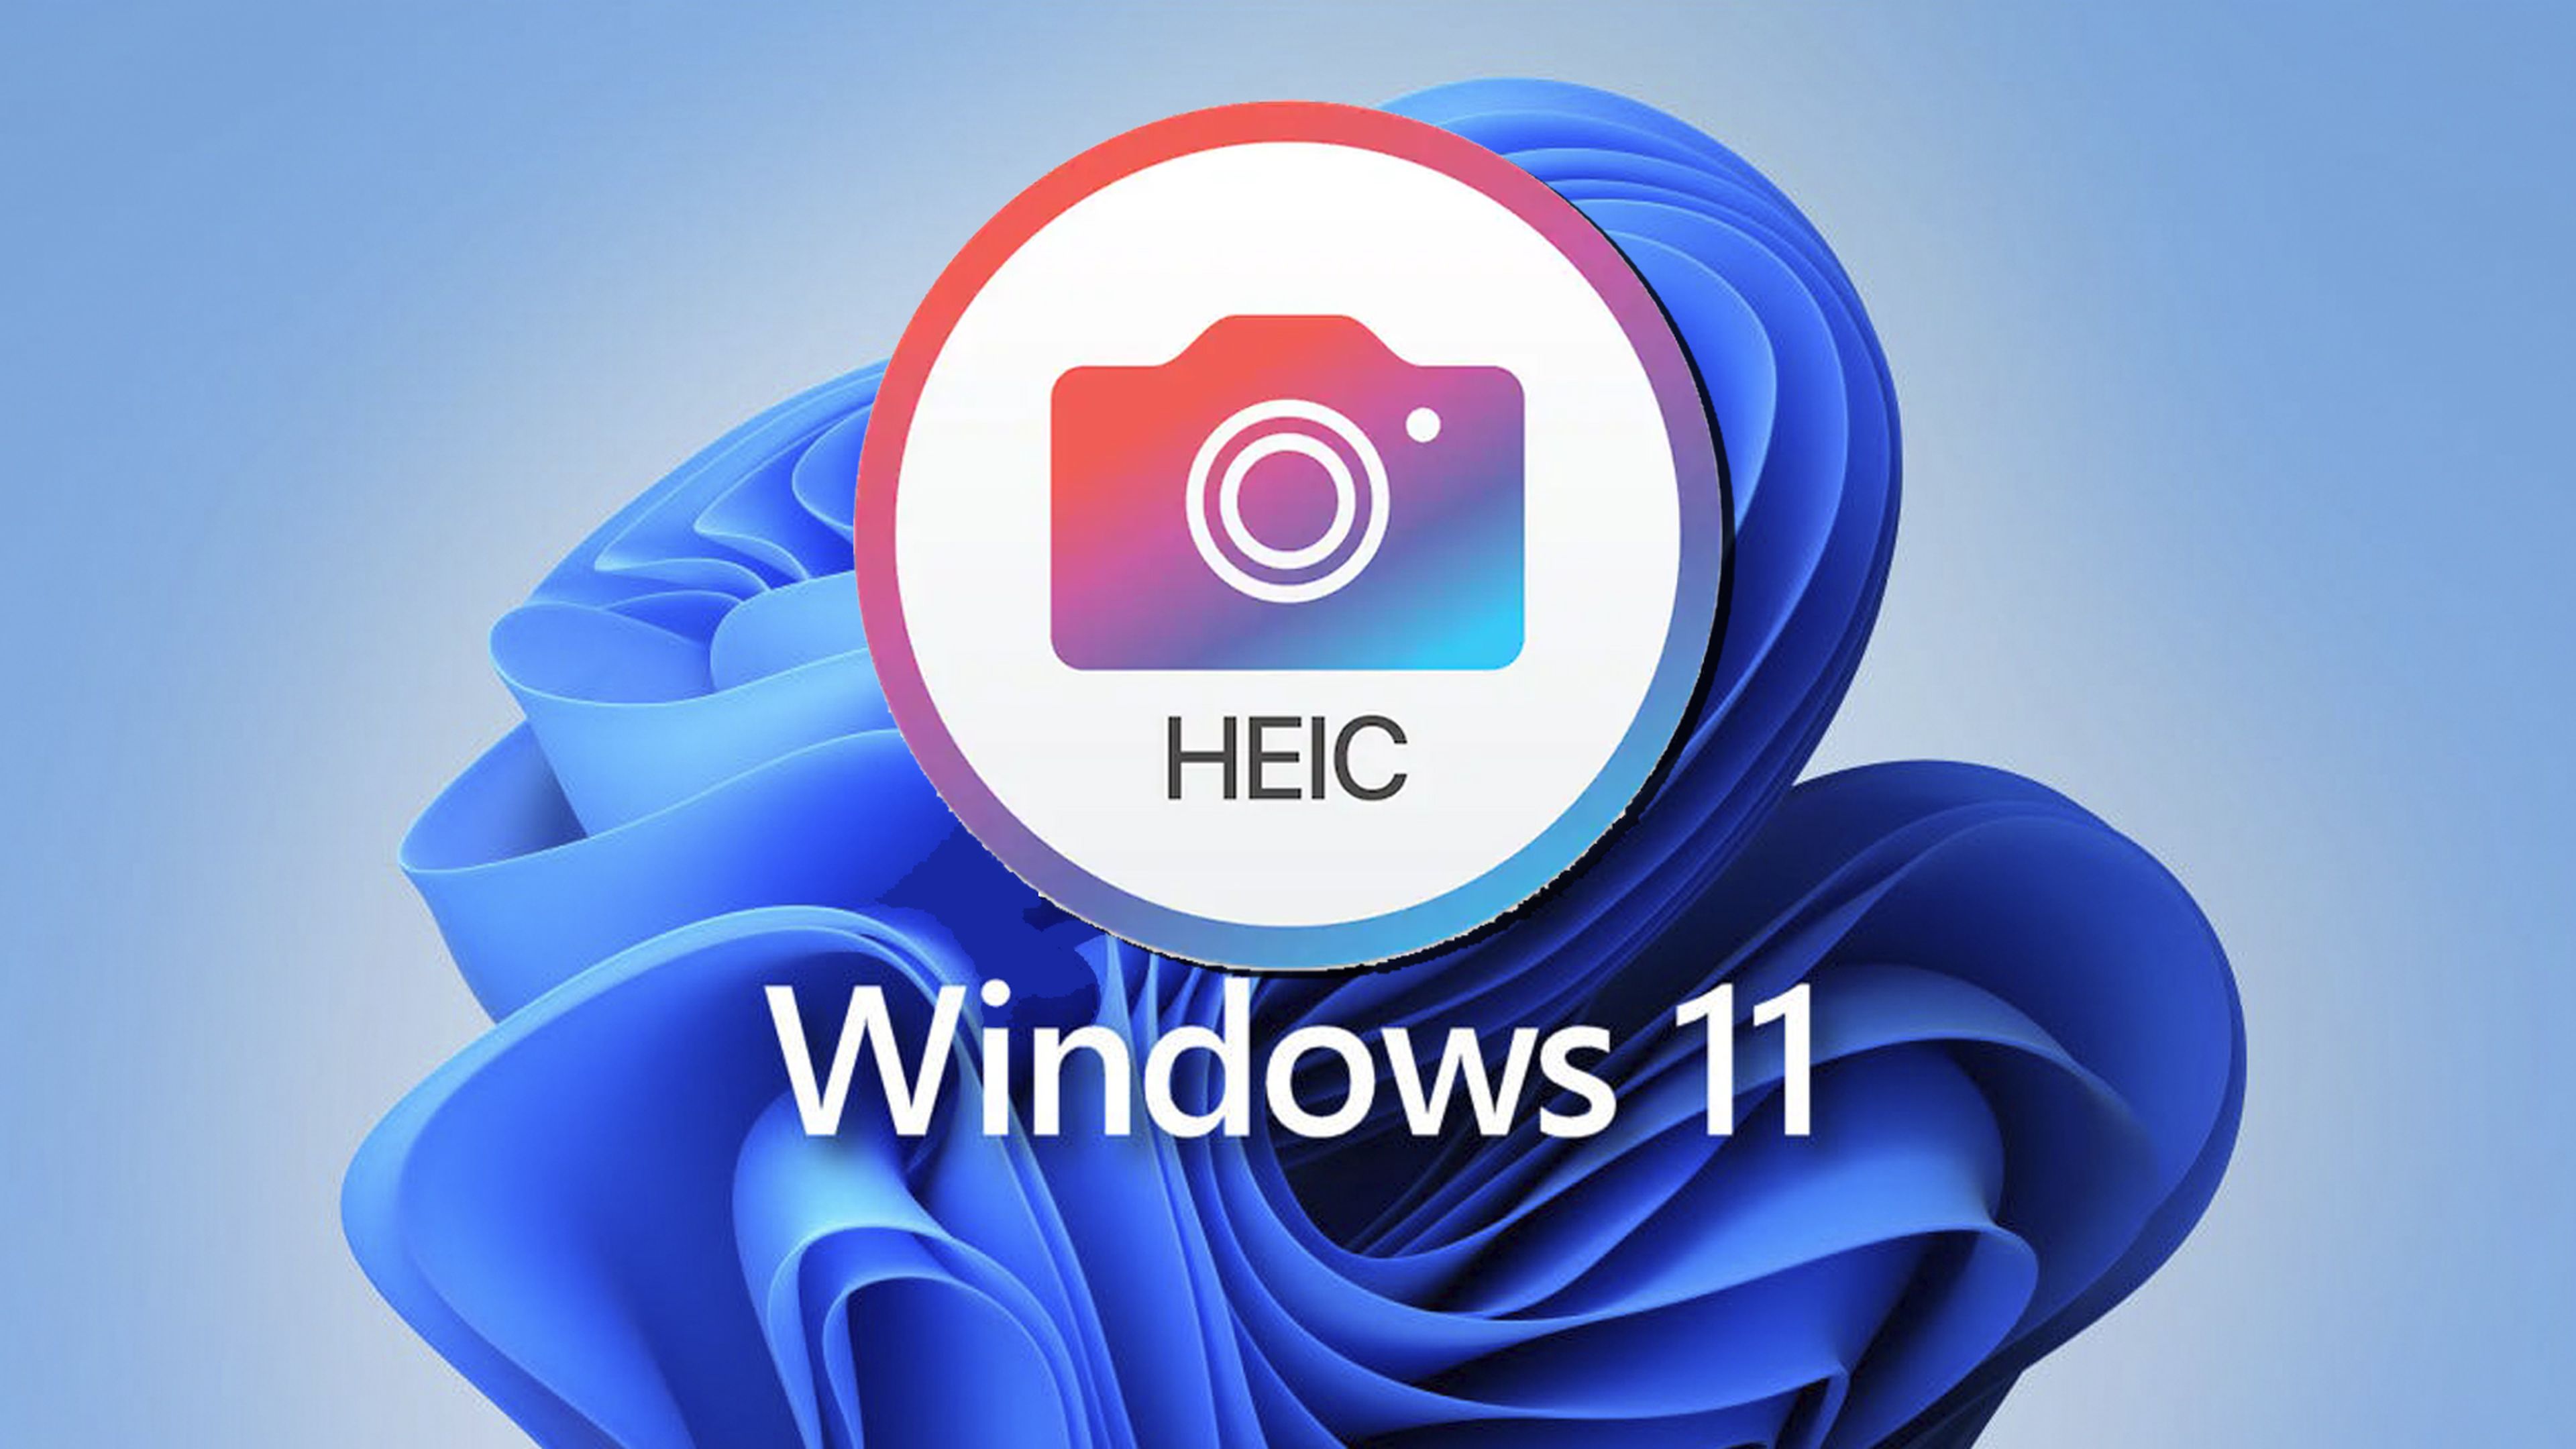 Windows 11 HEIC